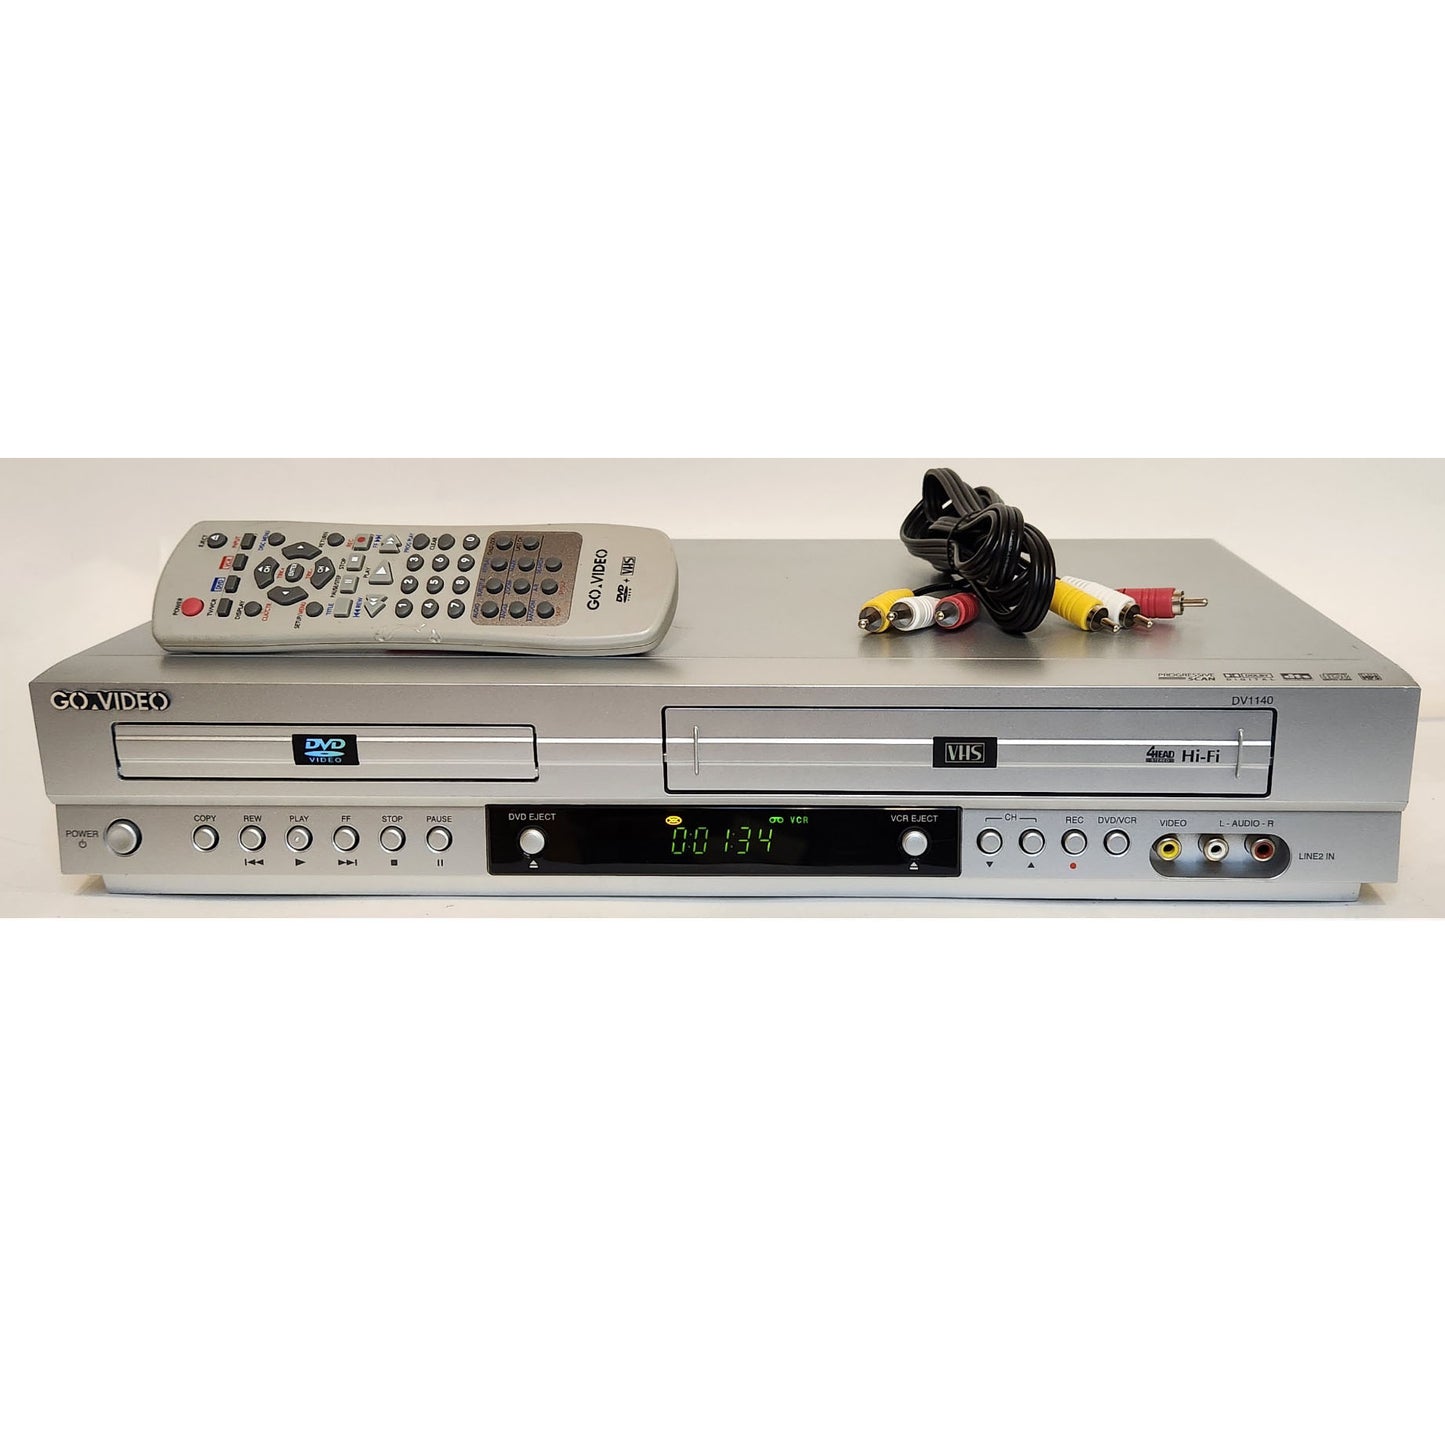 GoVideo DV1140 VCR/DVD Player Combo